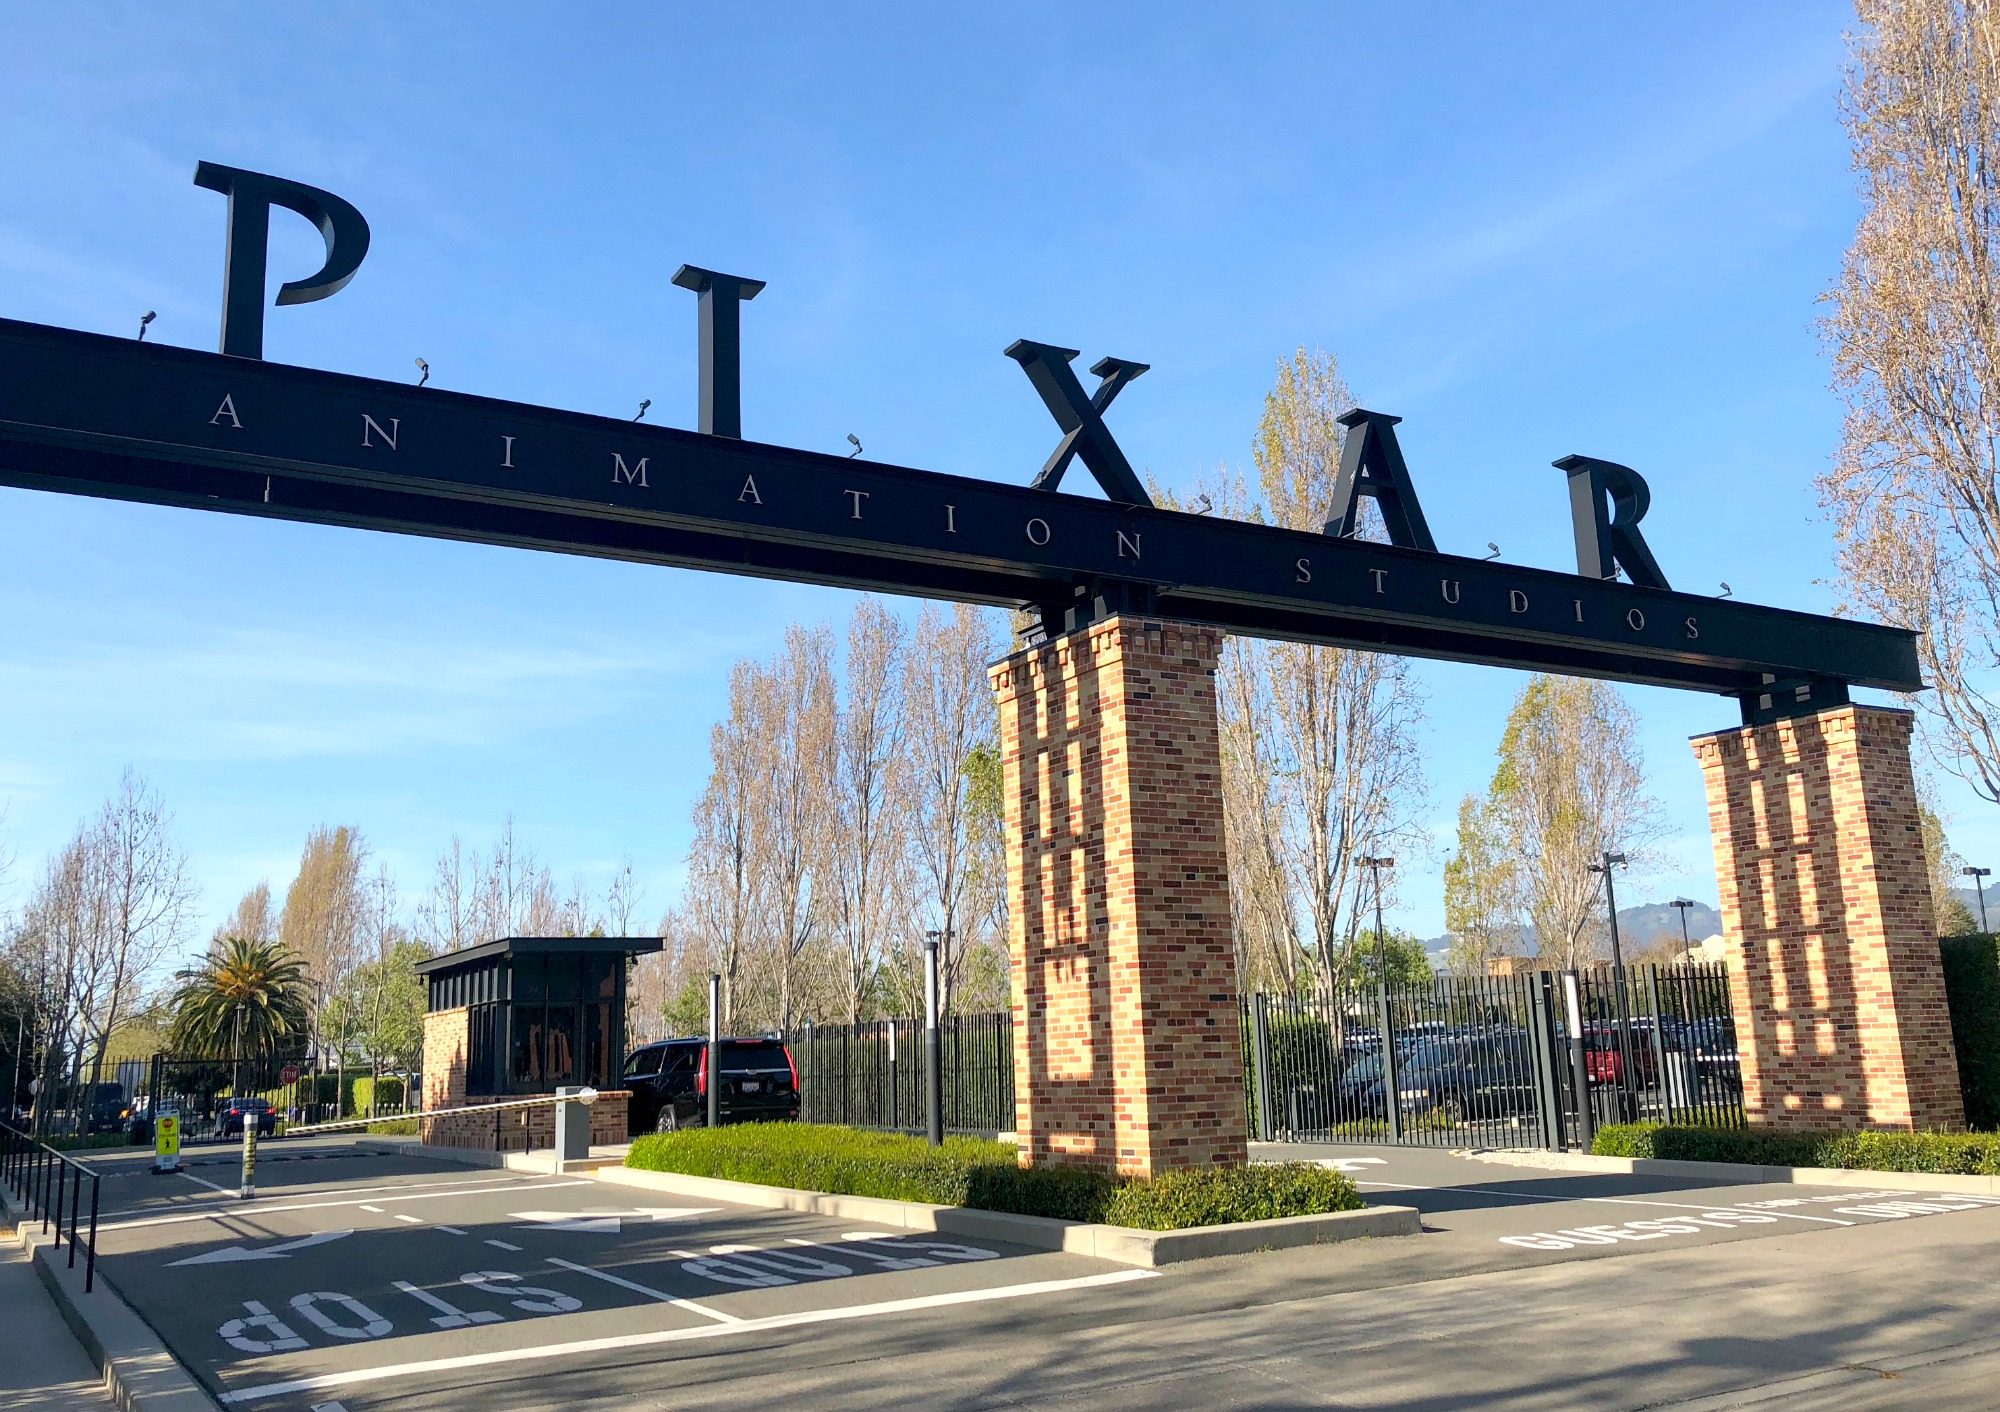 pixar studios tour tickets